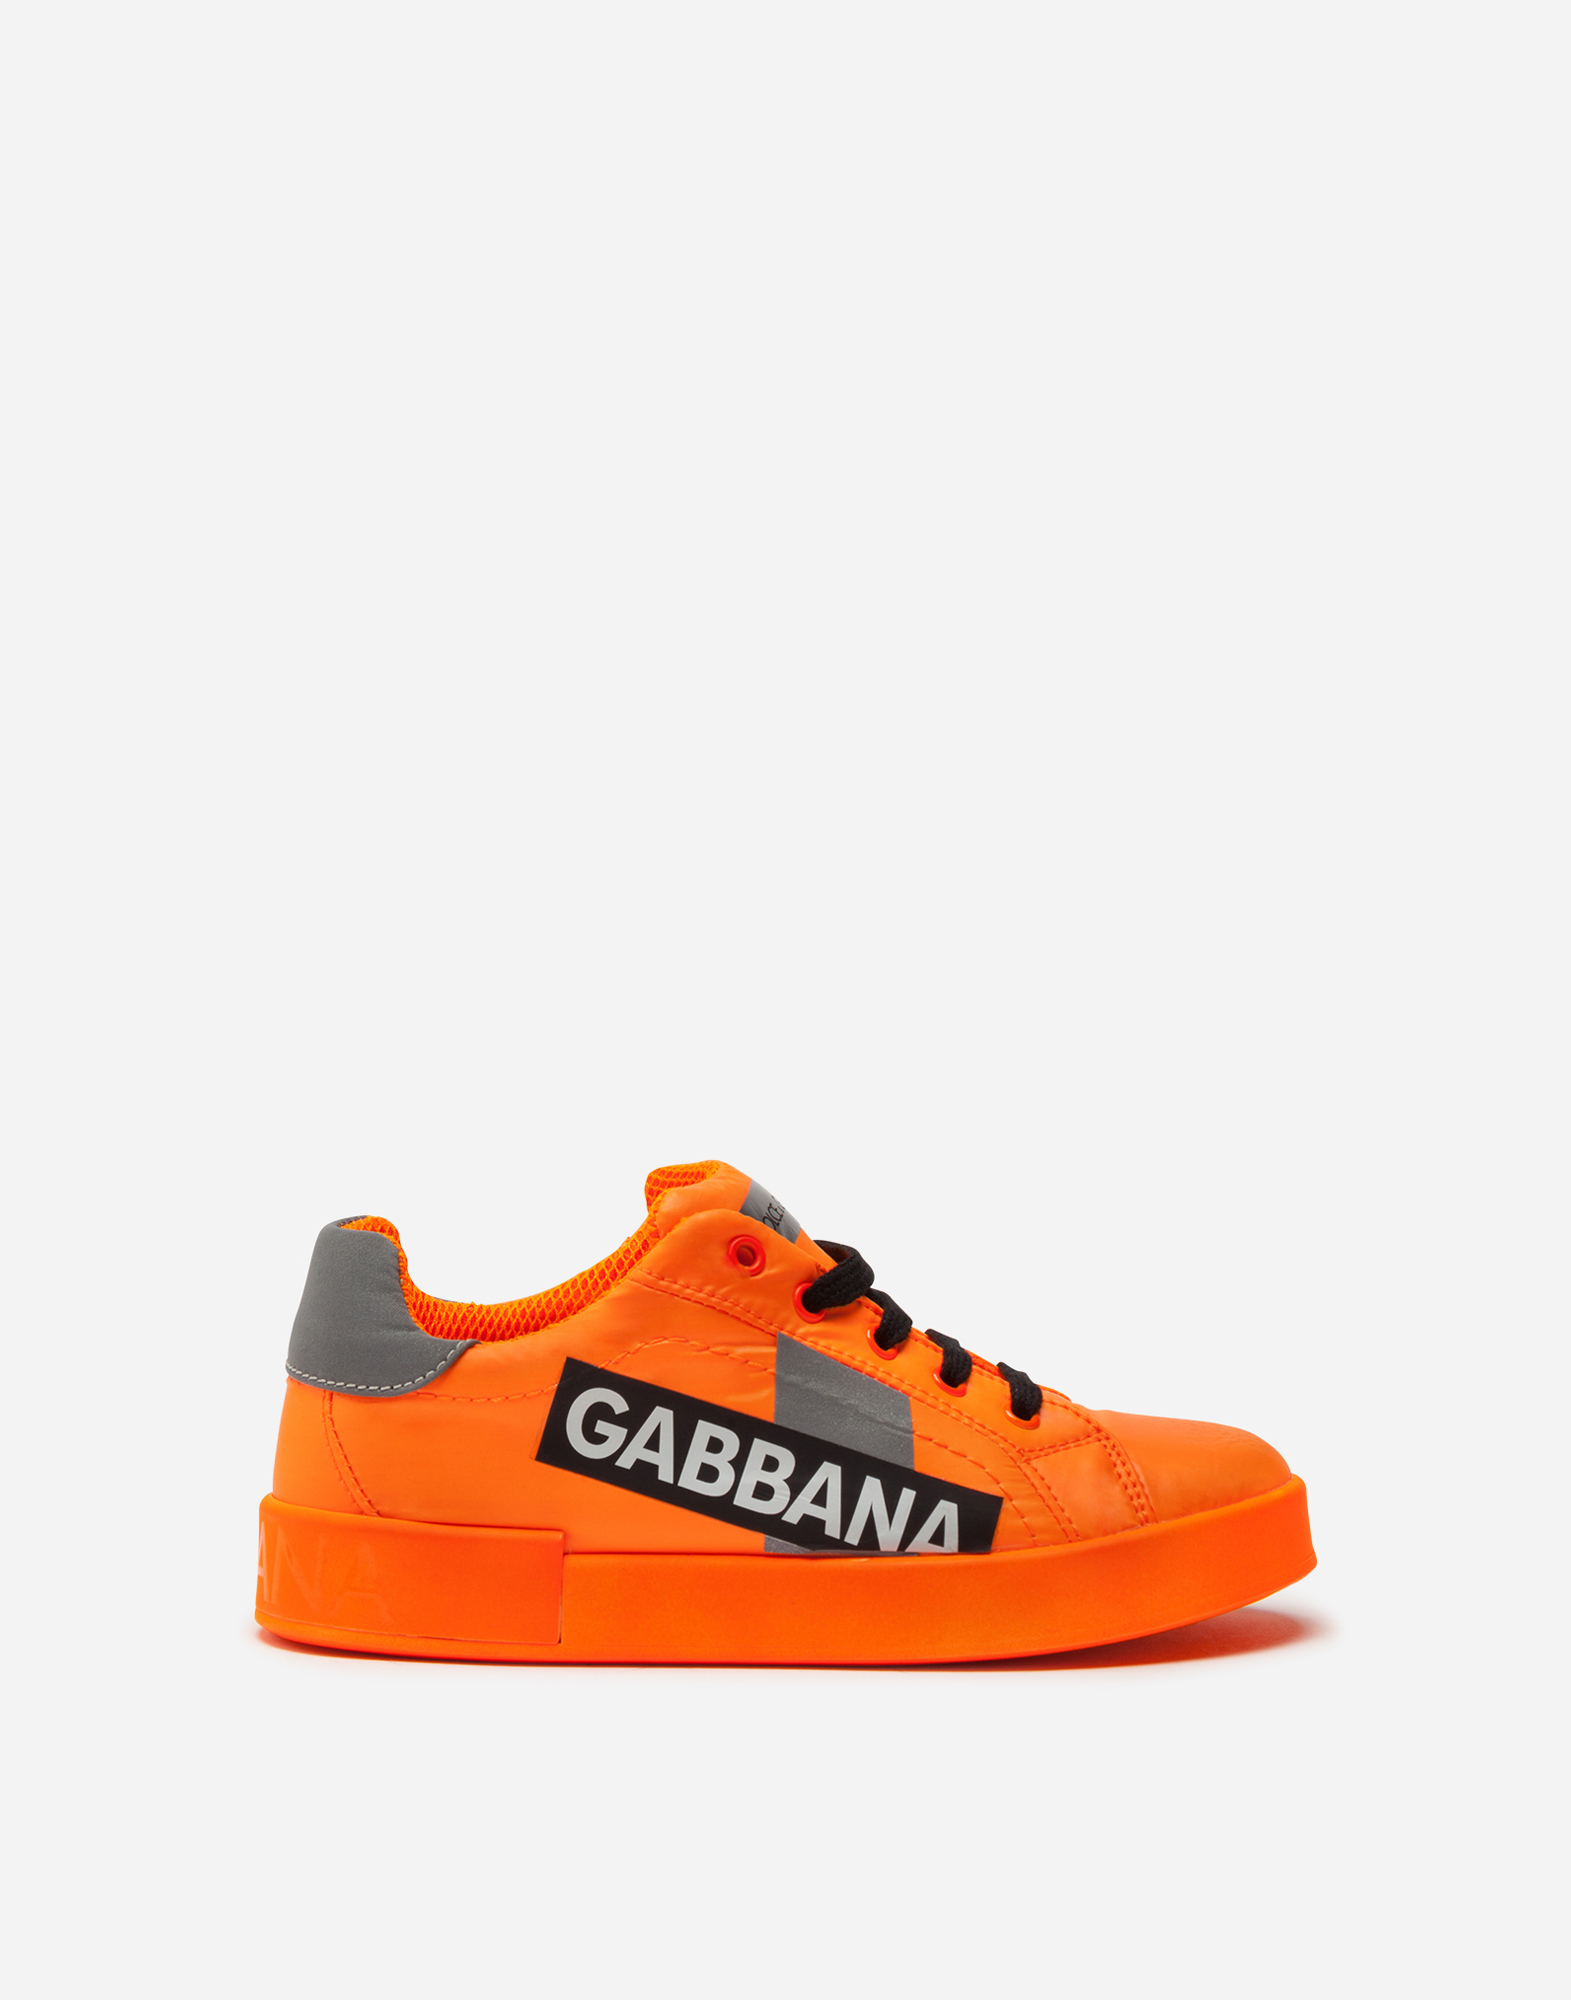 dolce and gabbana custom sneakers